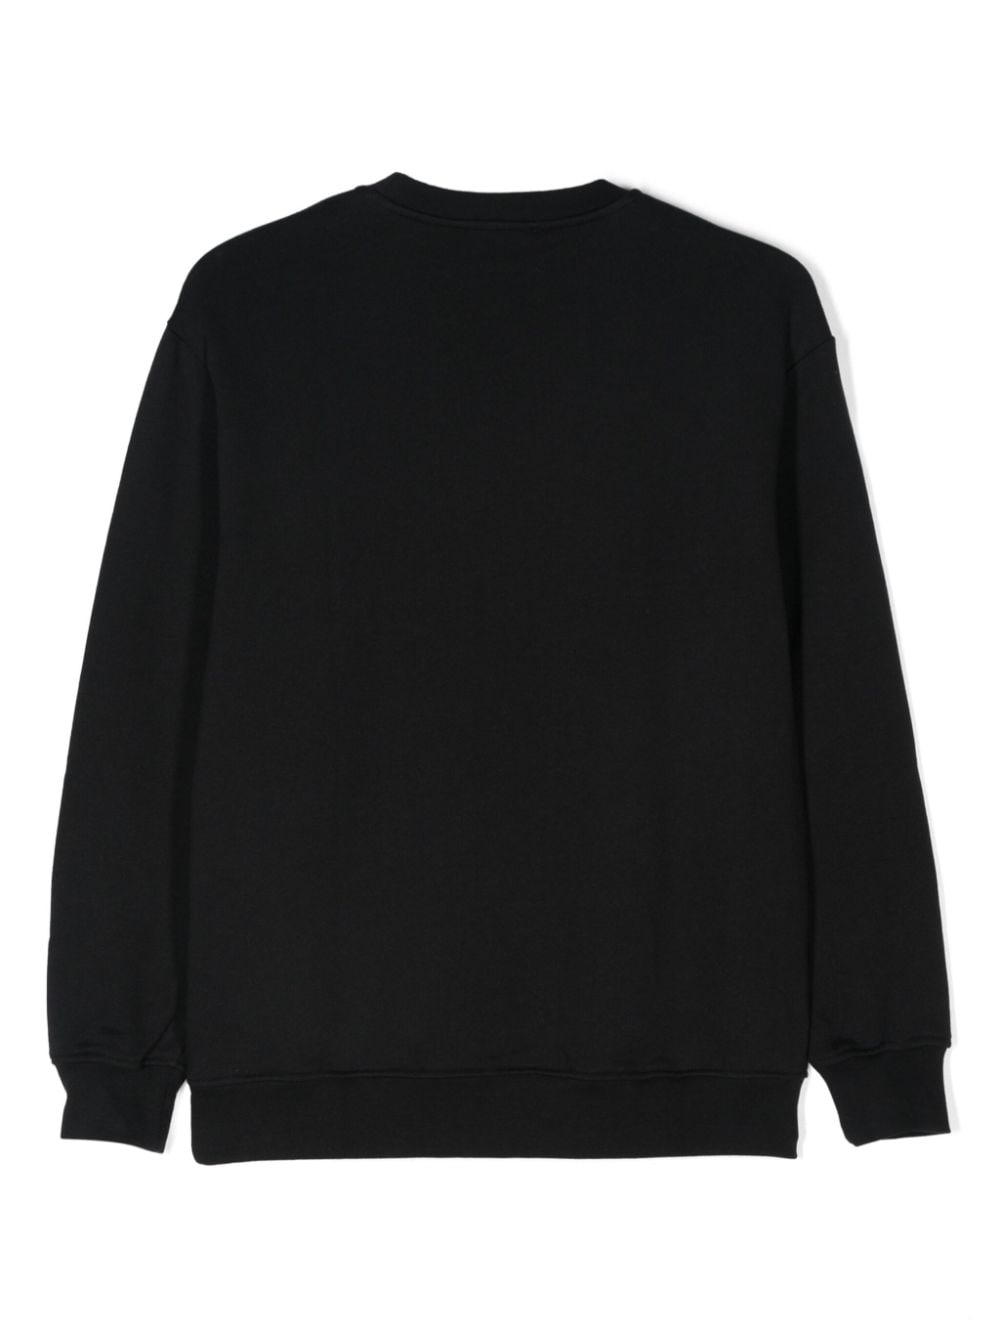 Black cotton sweatshirt for girls